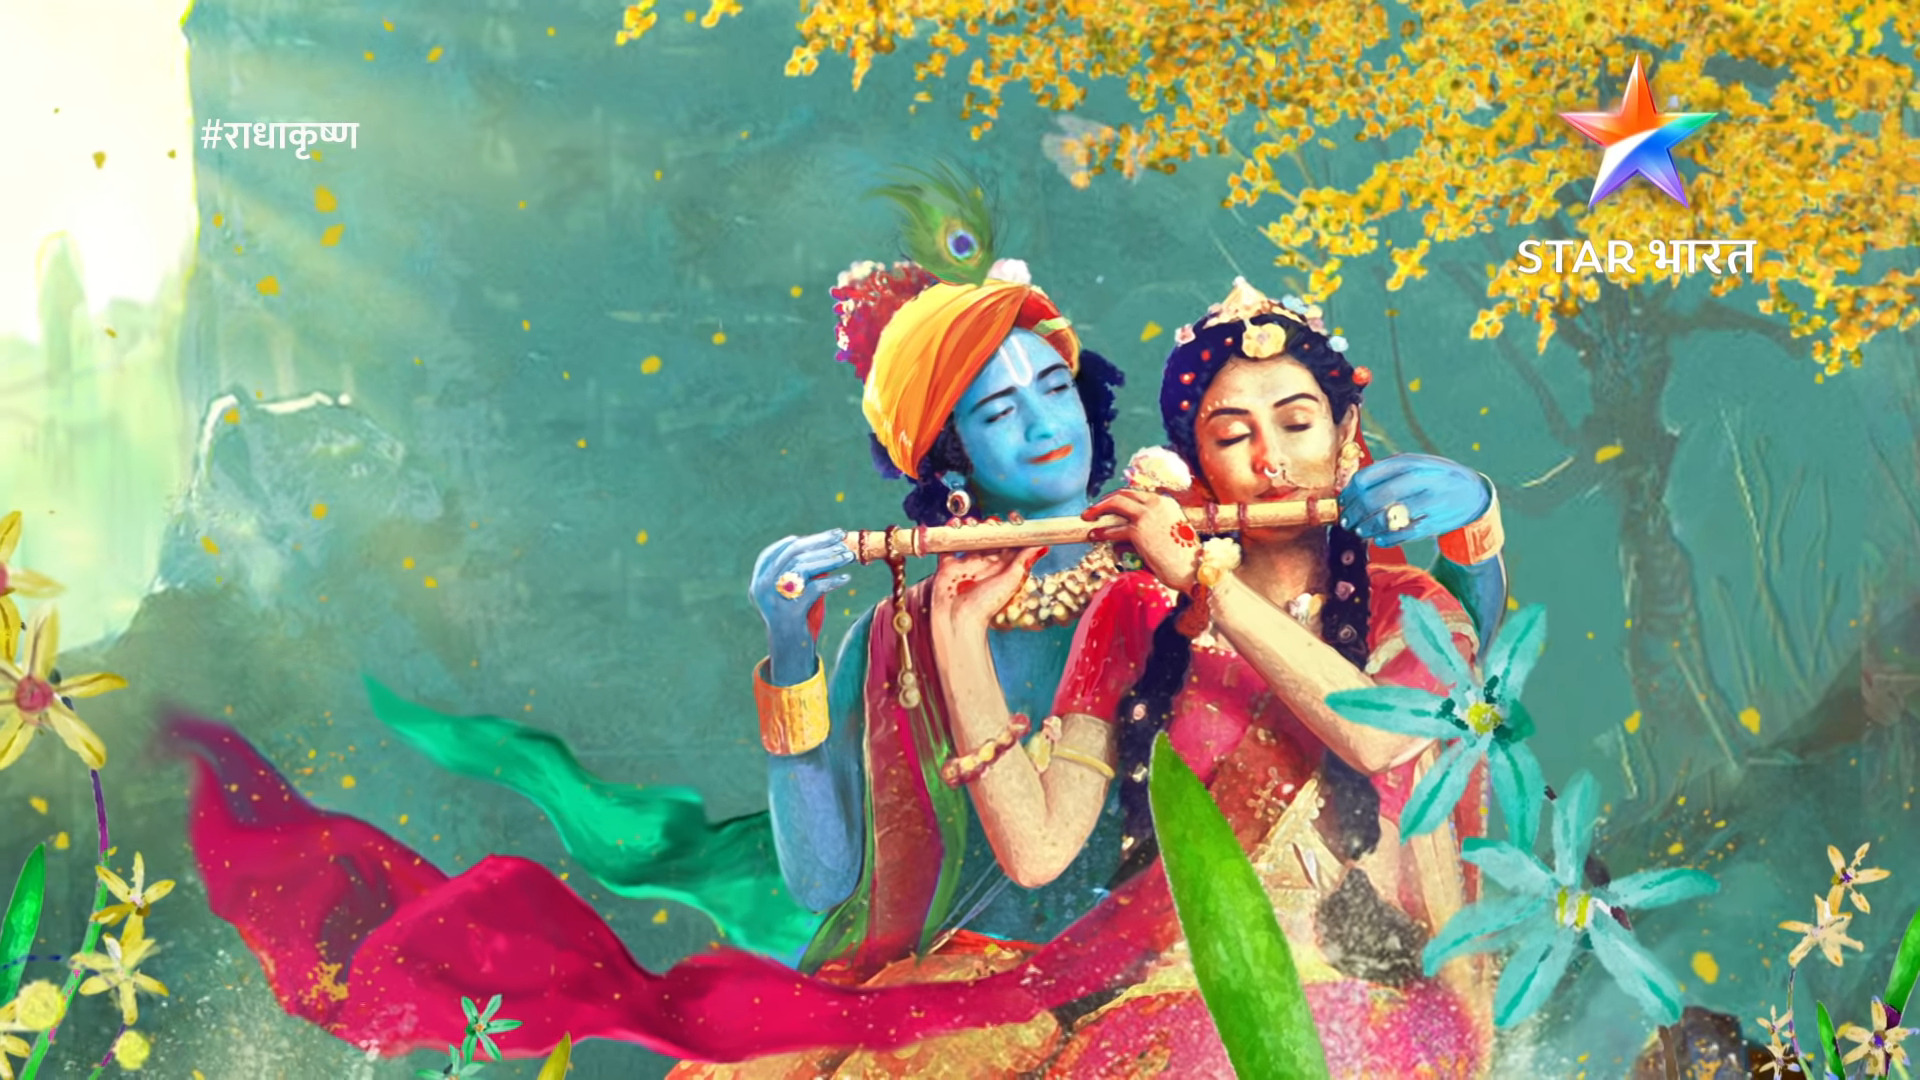 Radha Krishna Star Bharat Serial Hd Wallpapers 1080p | Hindu Gods and